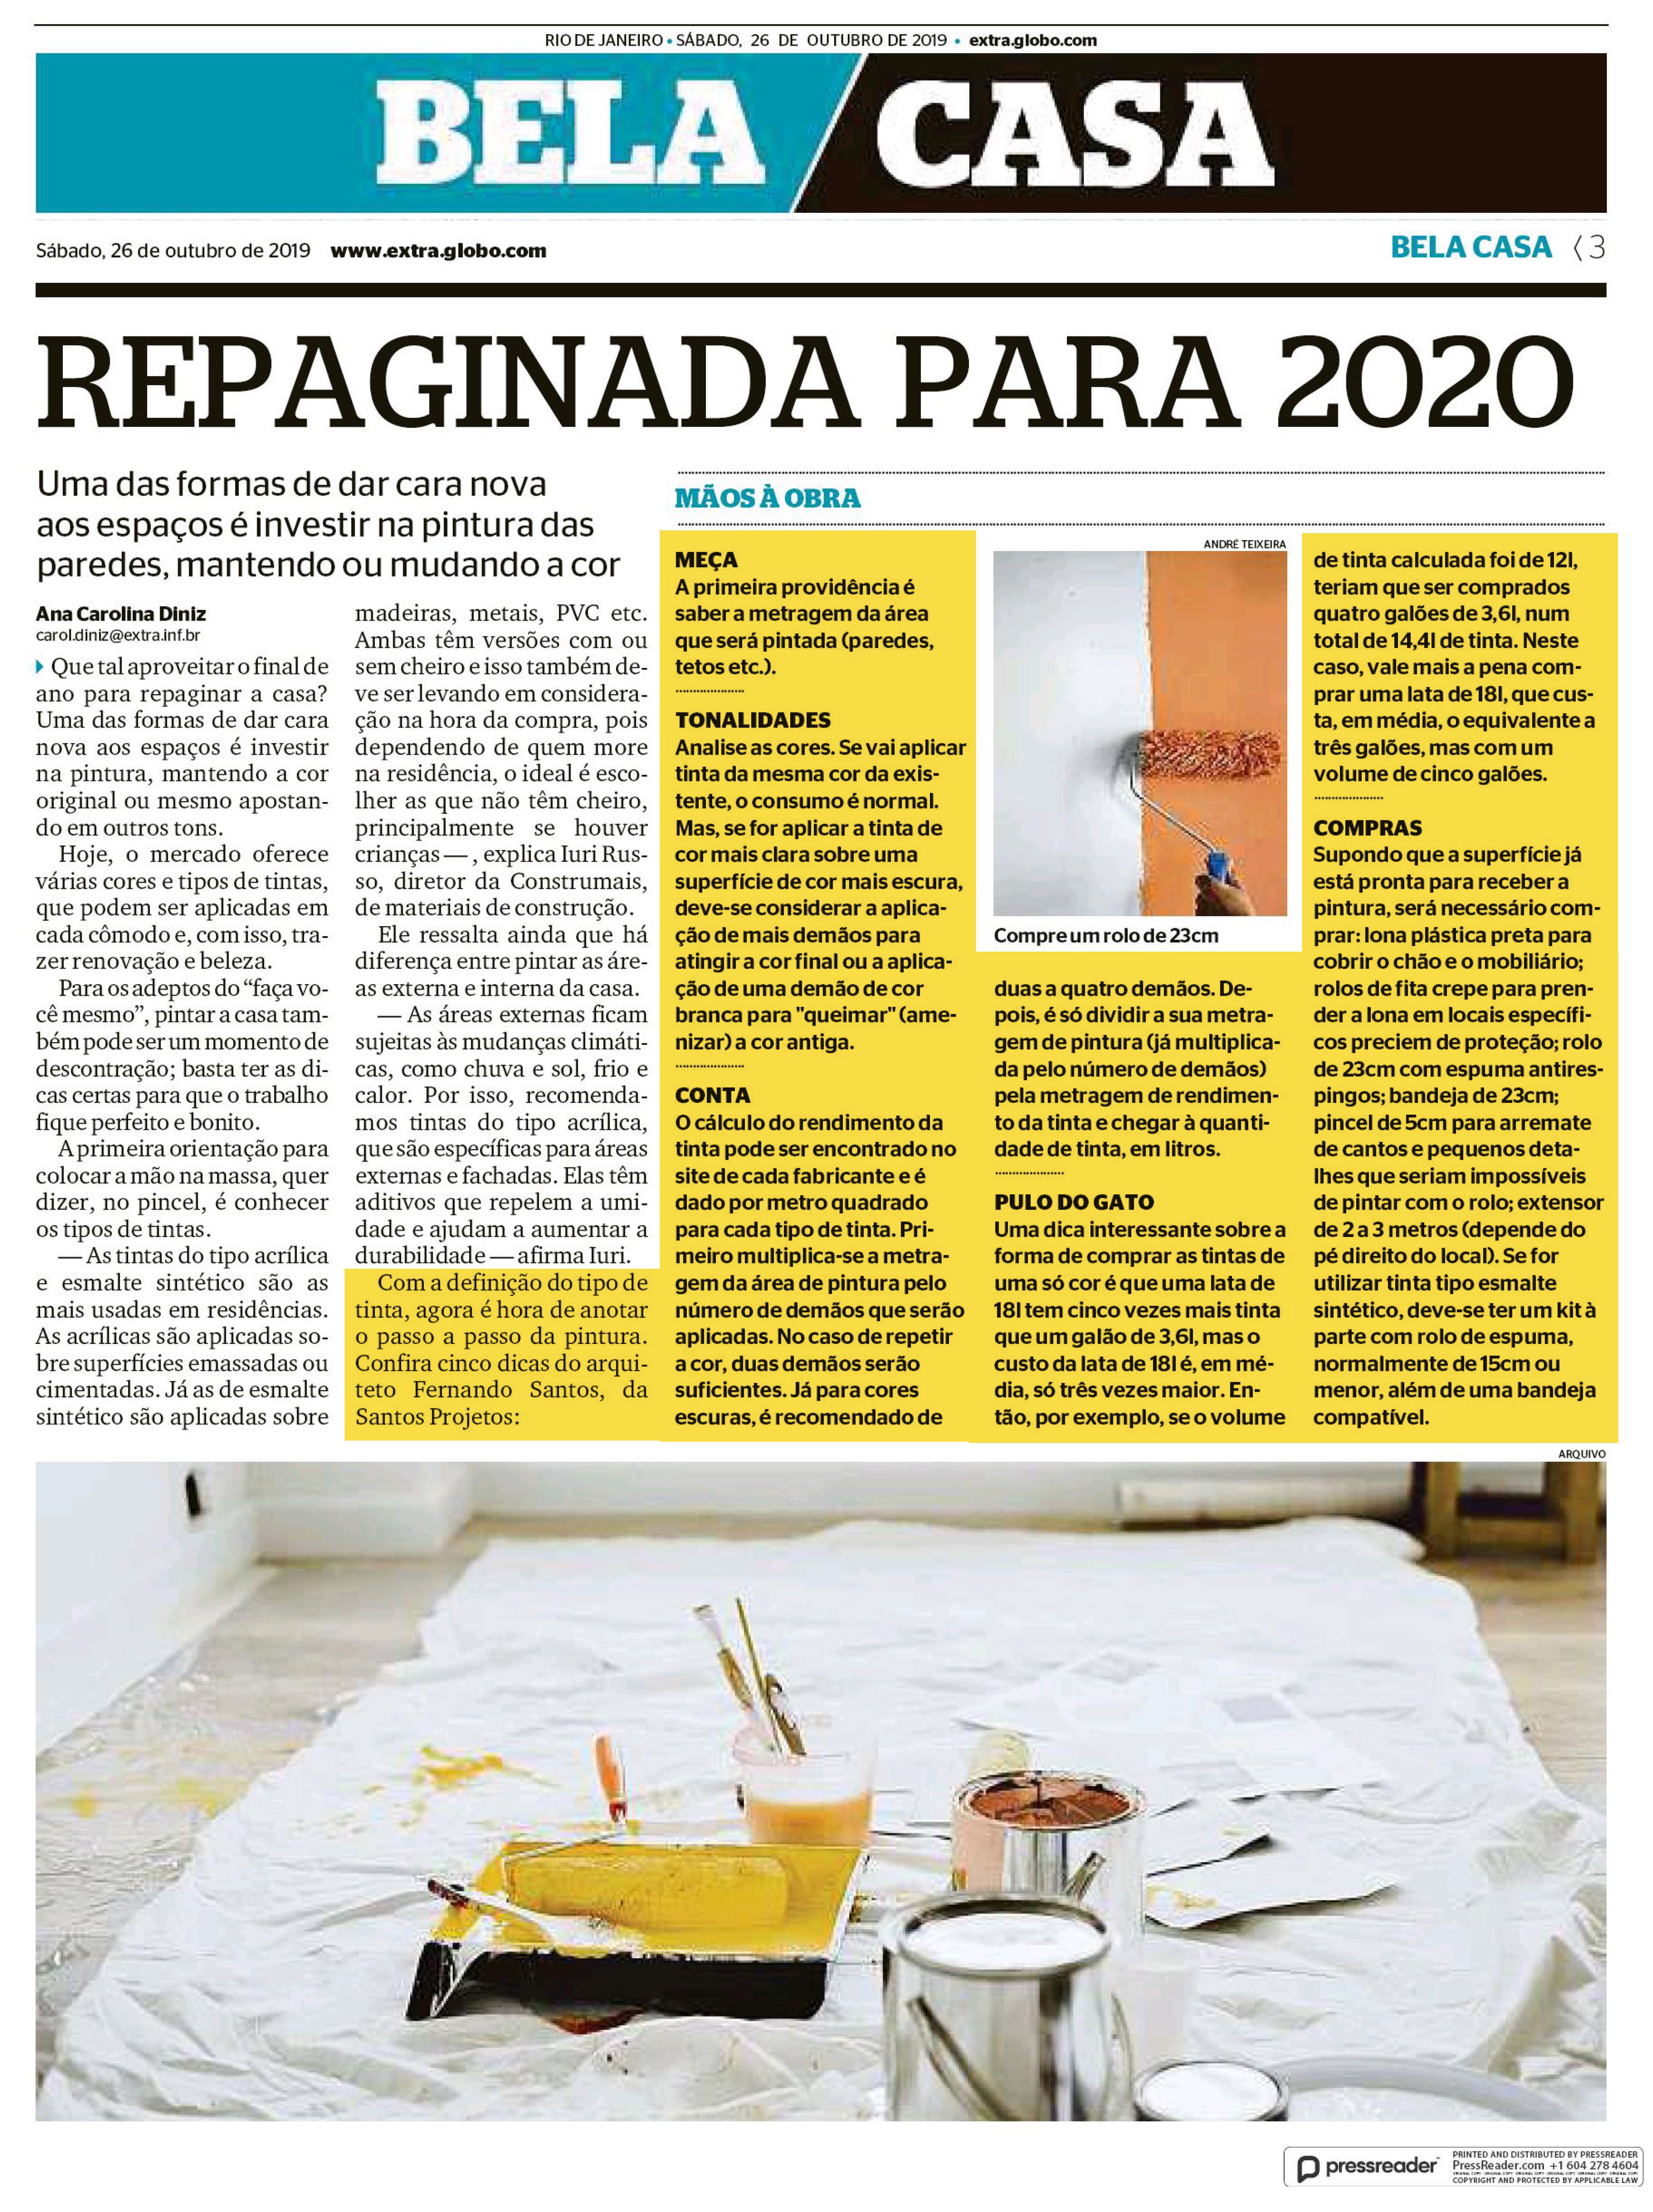 Jornal Extra (caderno Bela Casa) – Repaginada para 2020